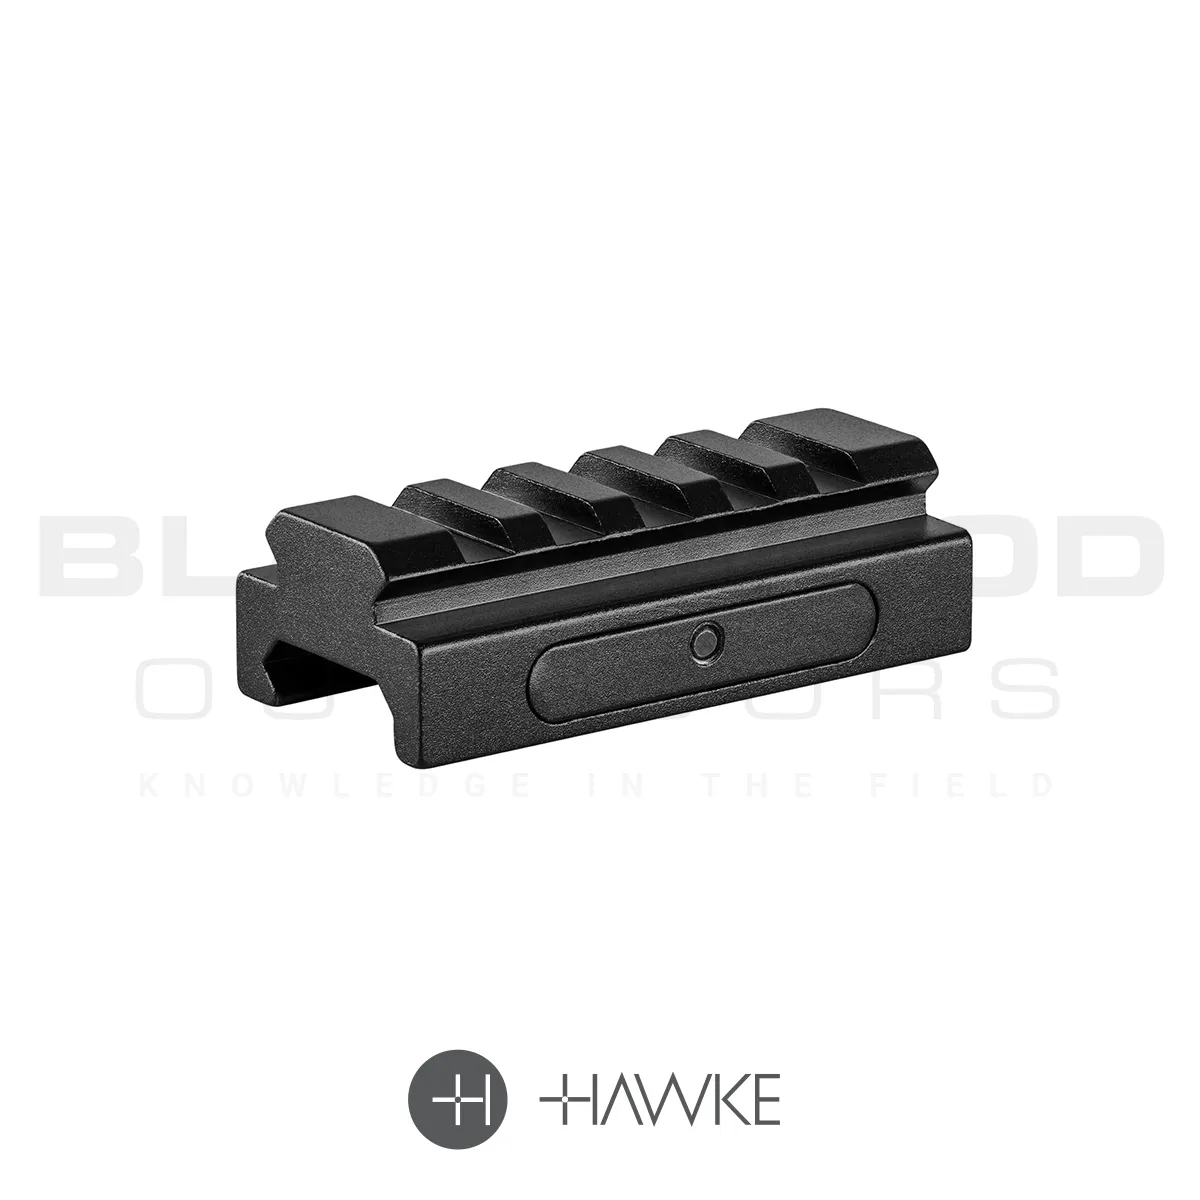 Hawke Optics weaver riser block or picatinny to picatinny, 64mm short mount.